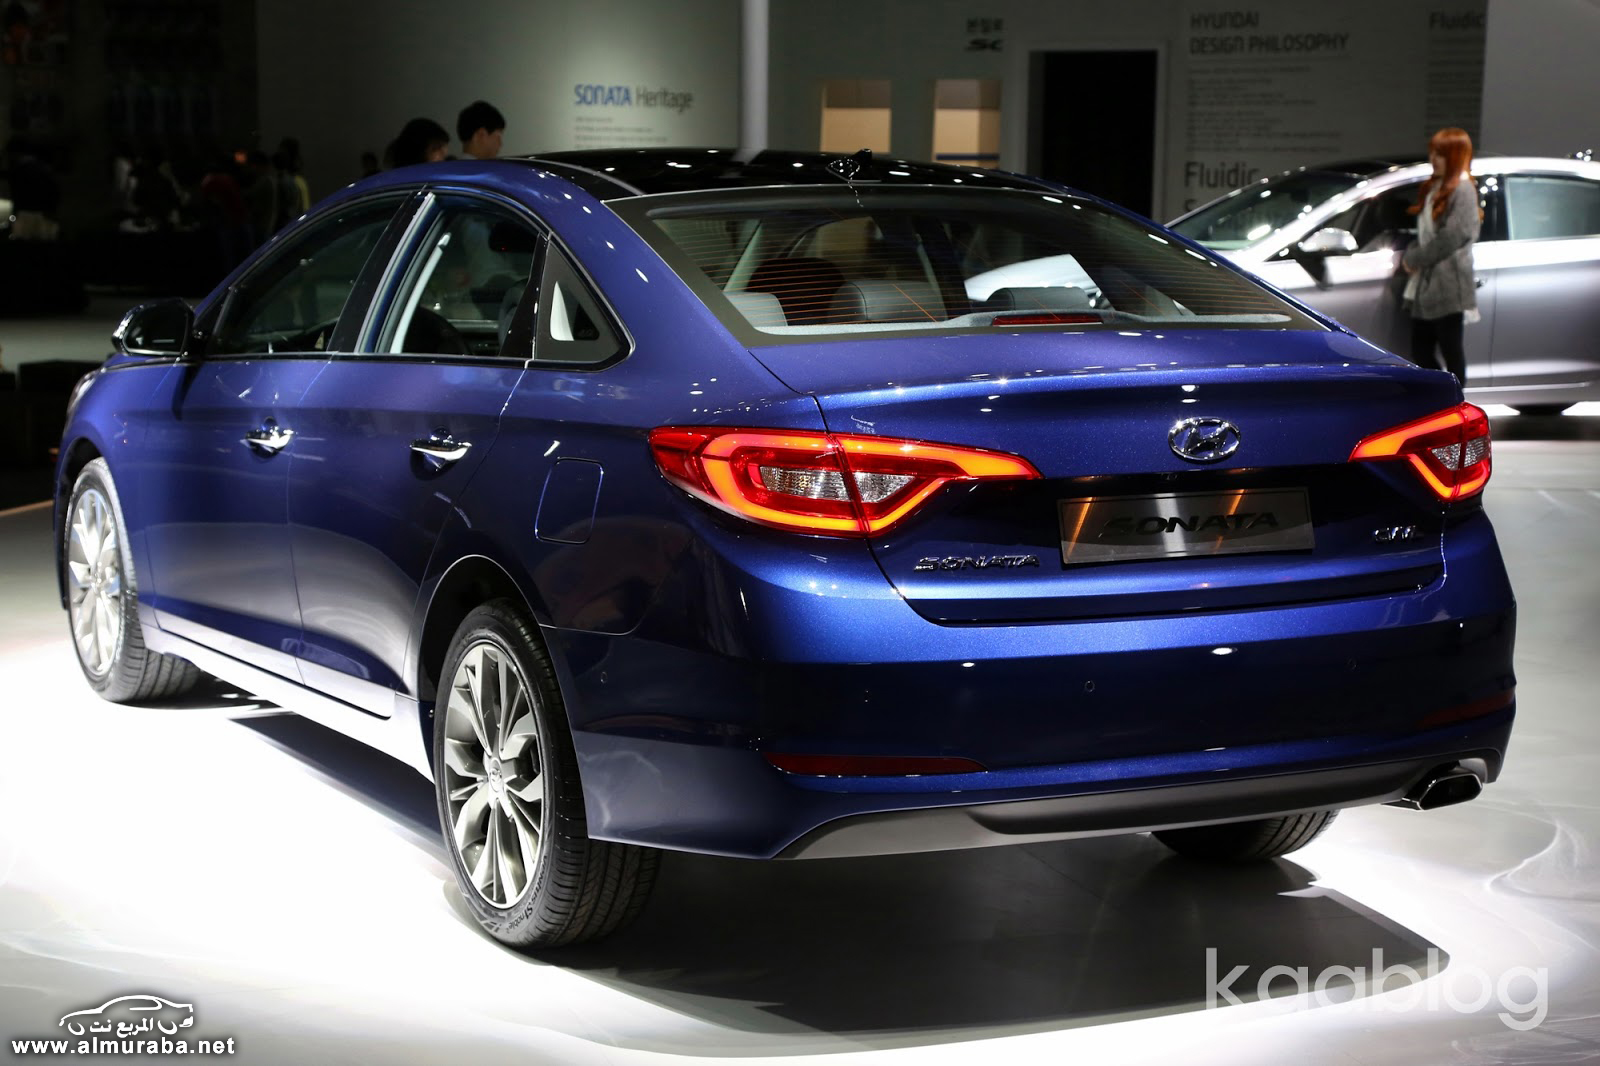 2015-Hyundai-Sonata-KDM-Carscoops6